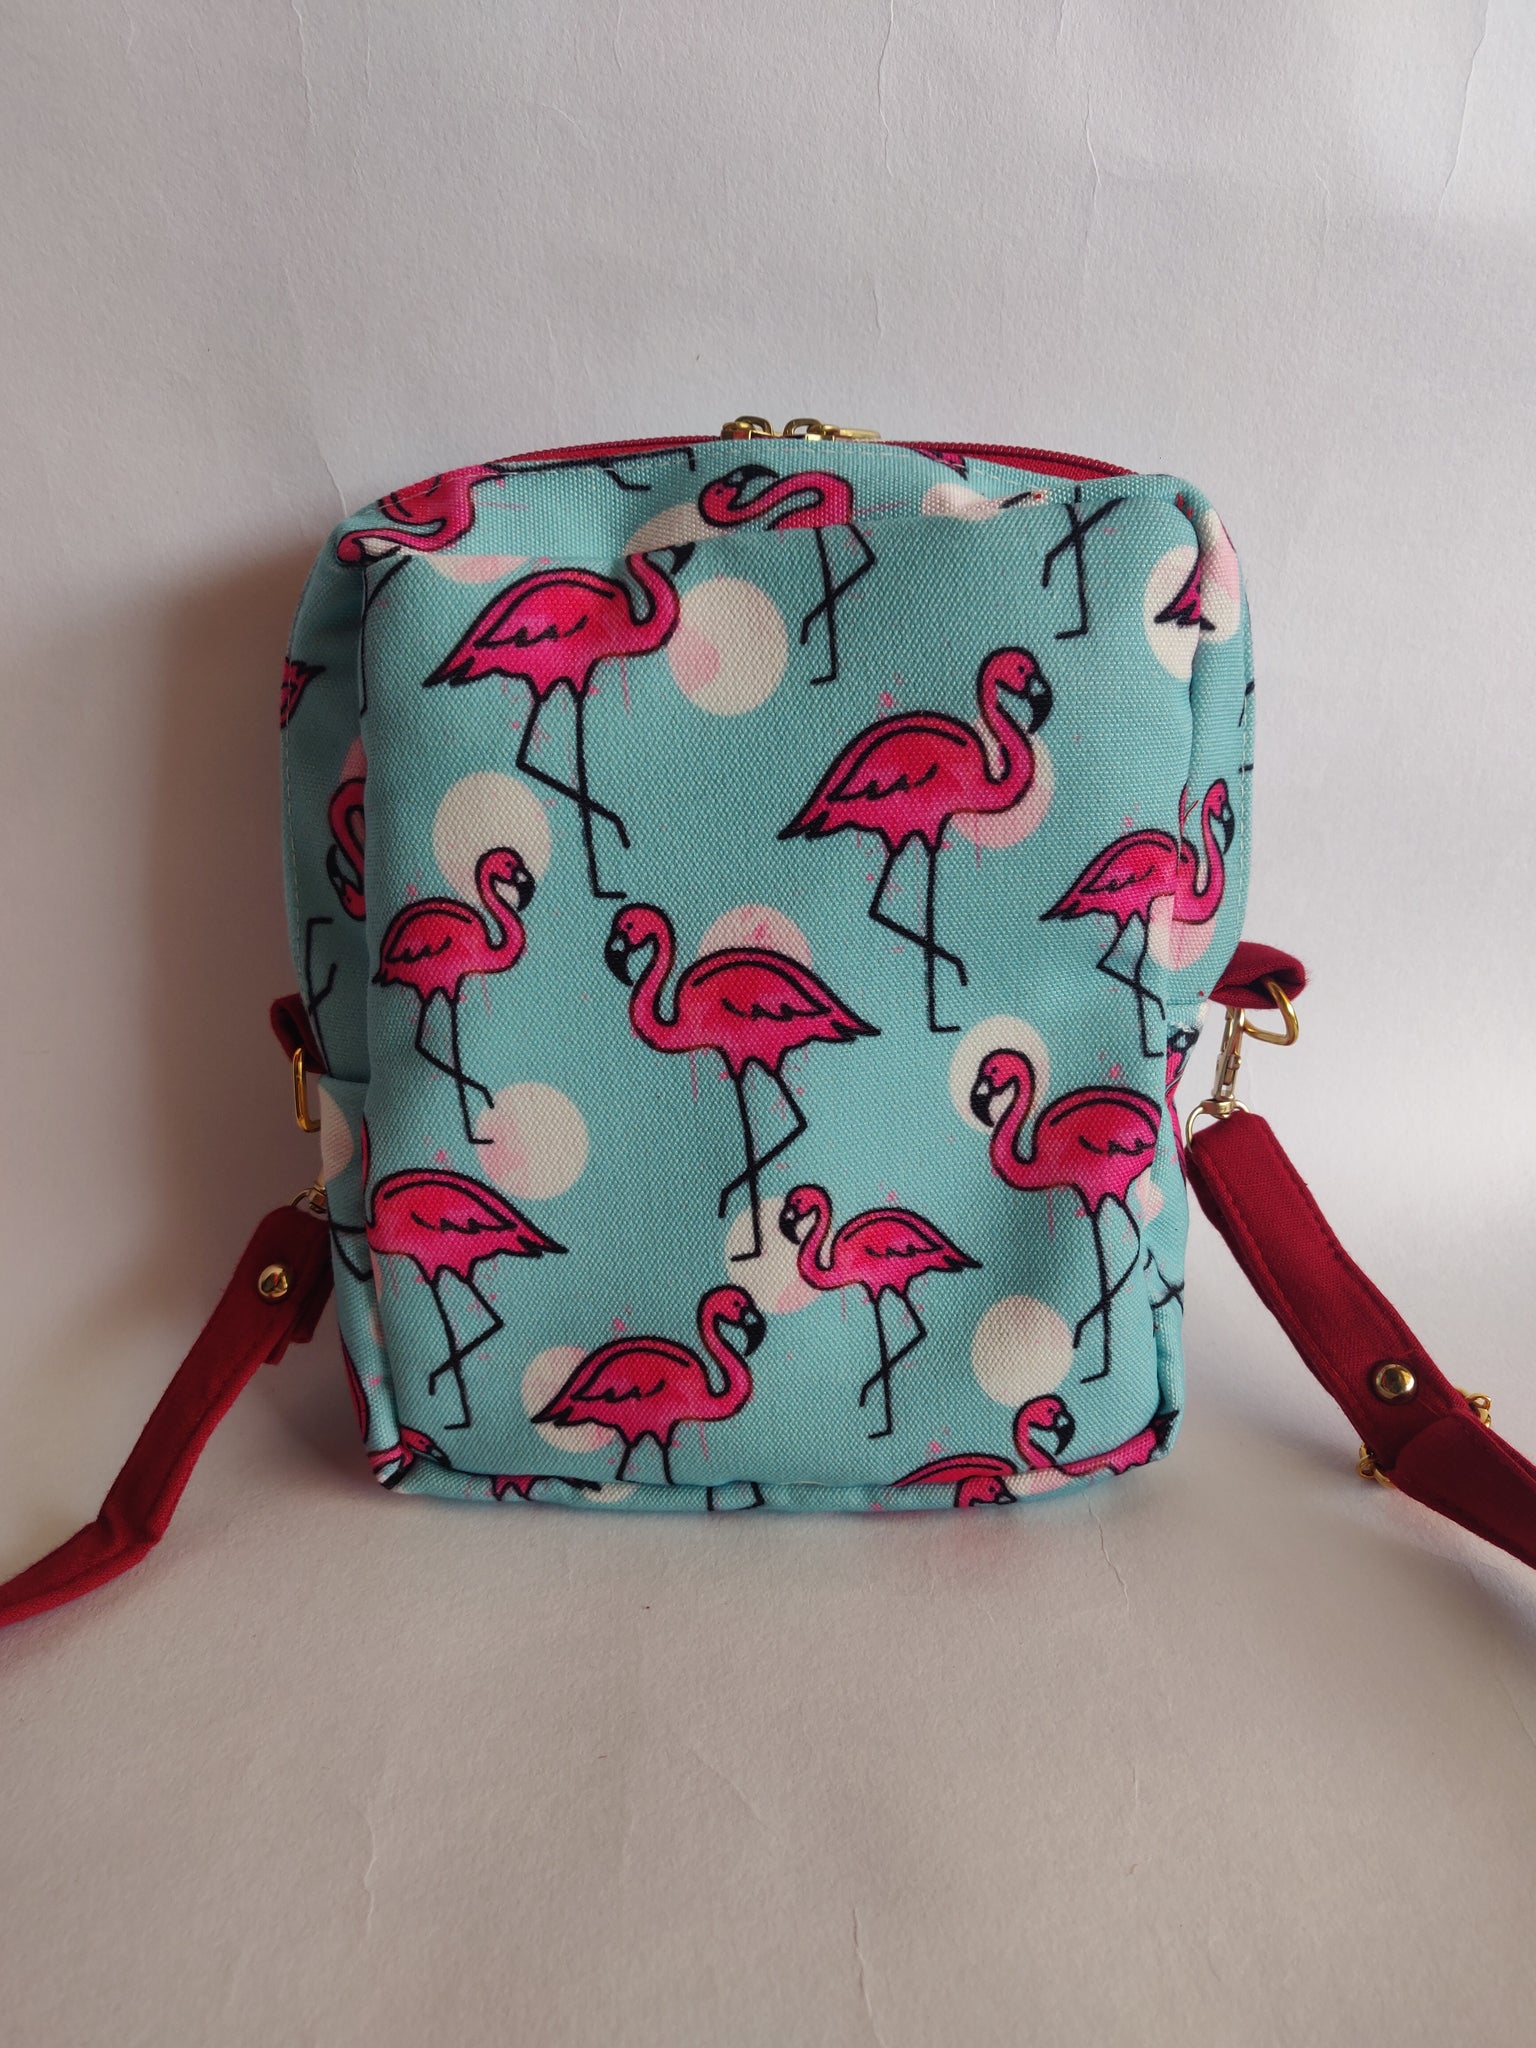 Flamingo ladies handbags at Rs 750/piece | Women Hand Bags in New Delhi |  ID: 26330606933